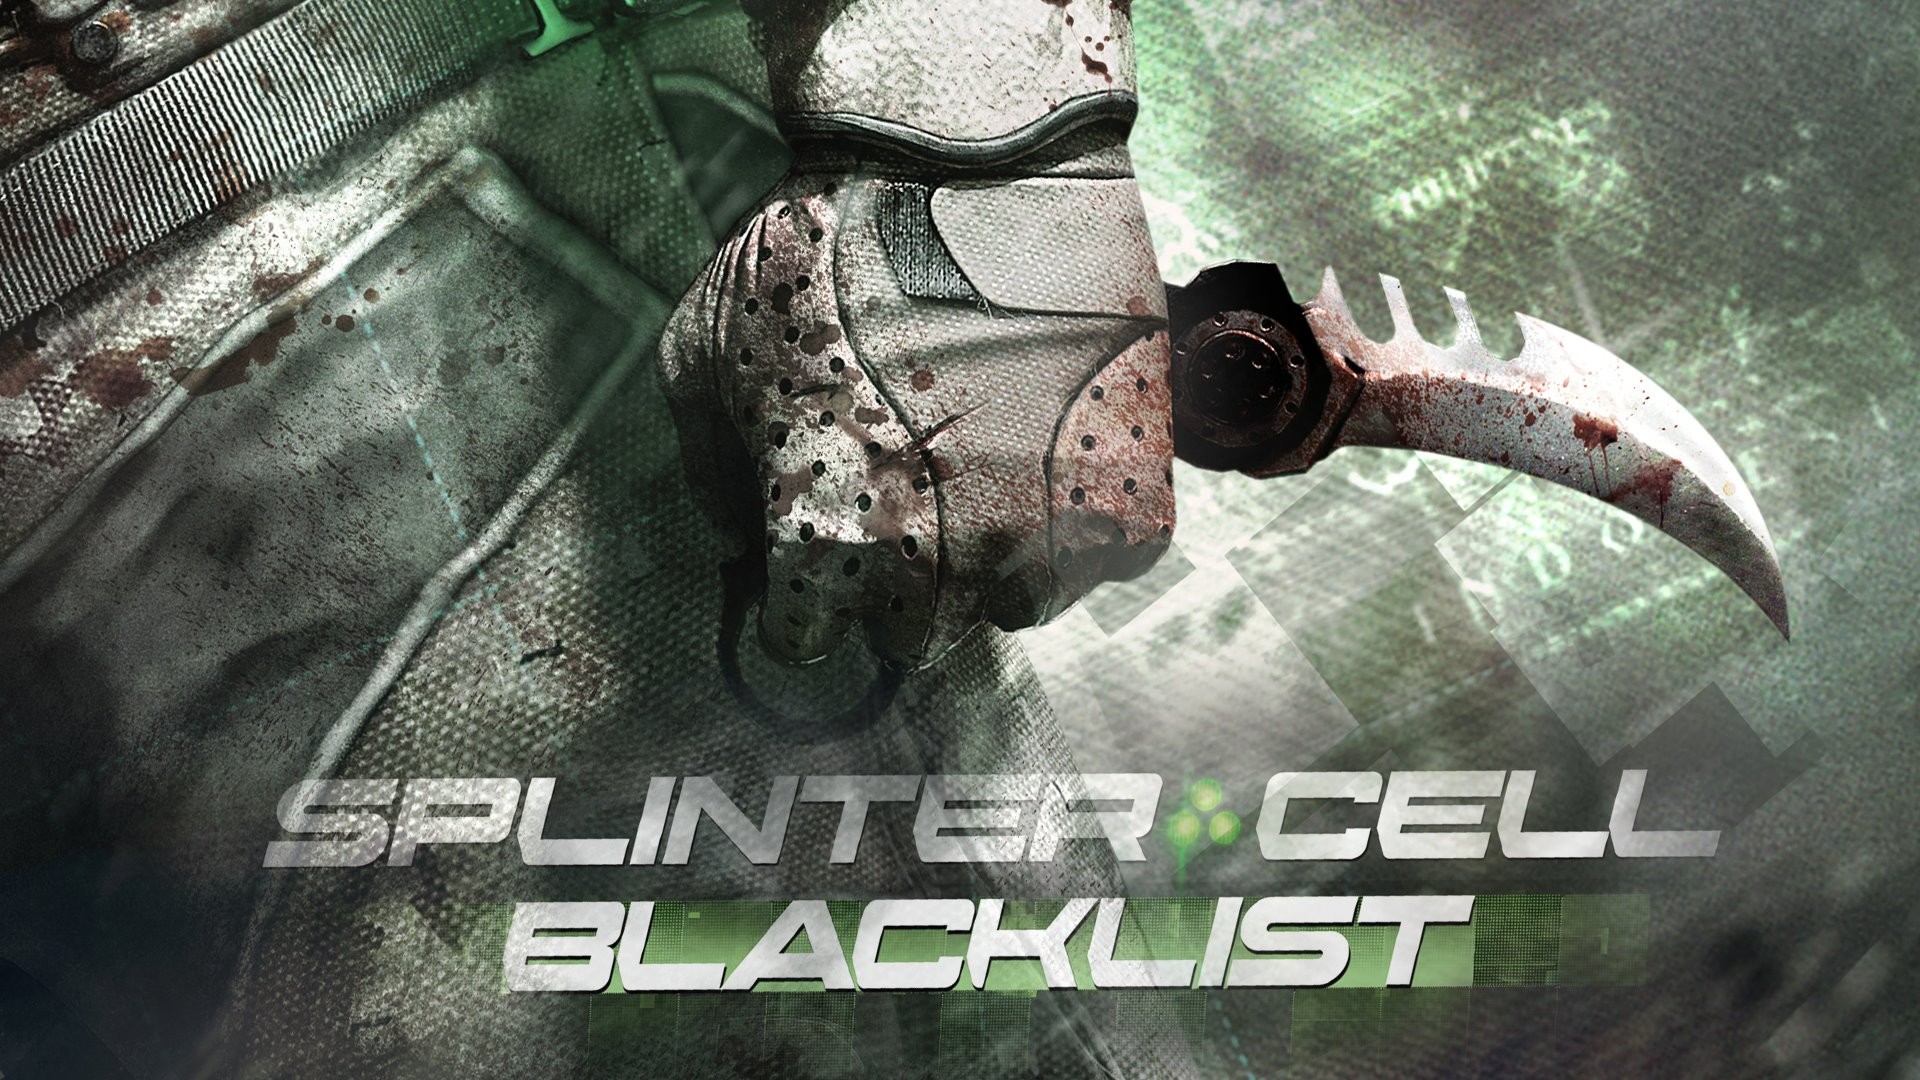 video game, tom clancy's splinter cell: blacklist, tom clancy's